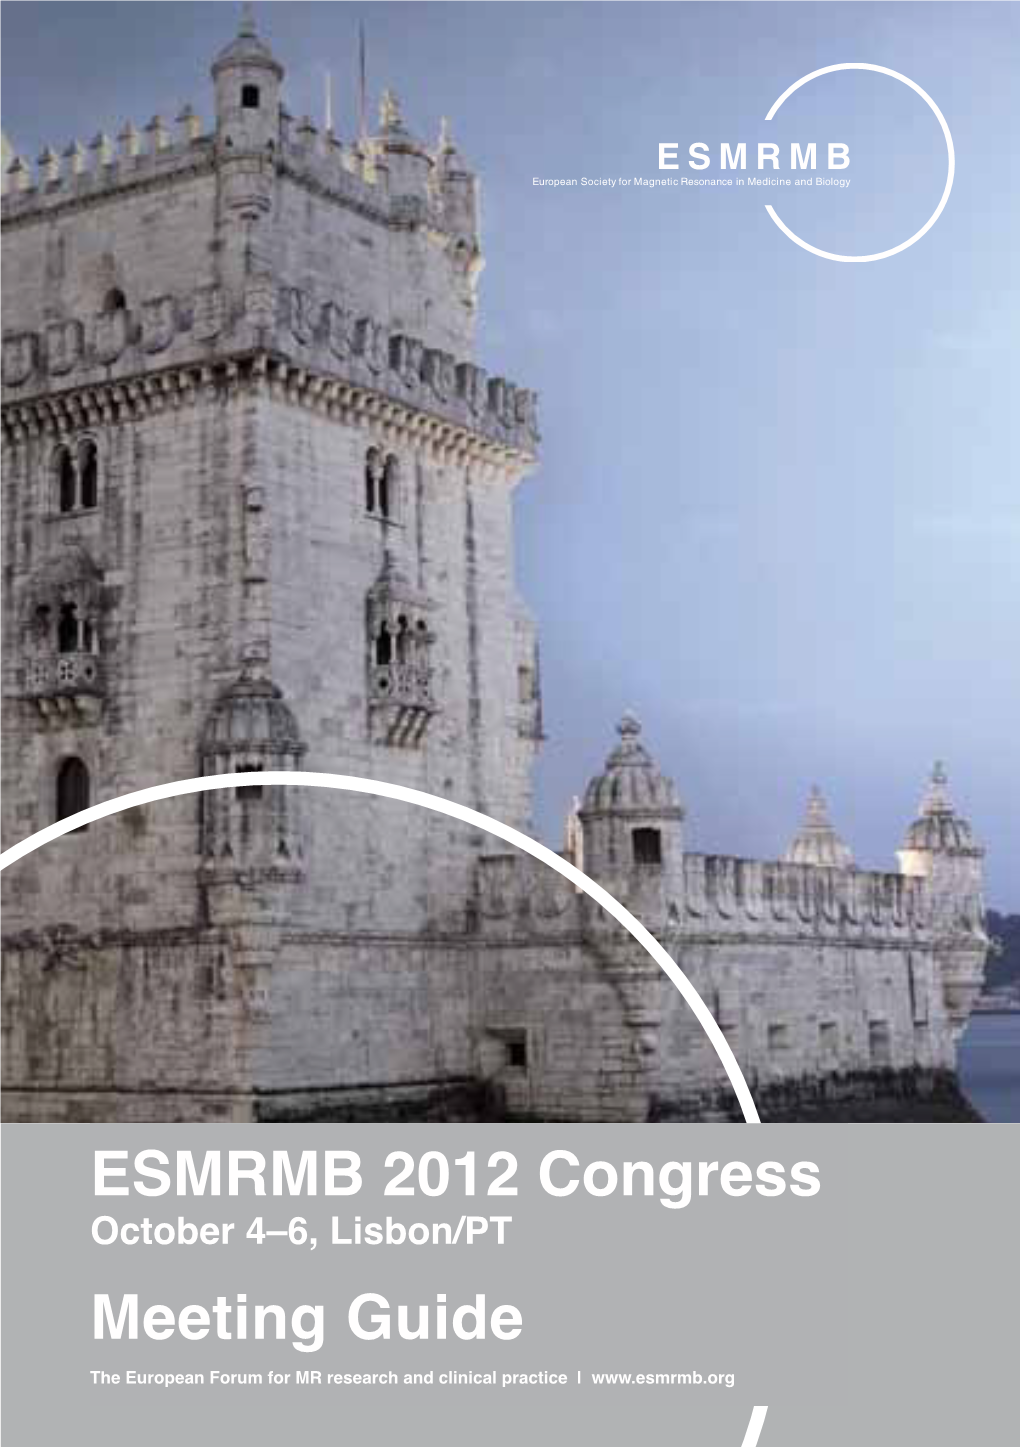 ESMRMB 2012 Congress Meeting Guide